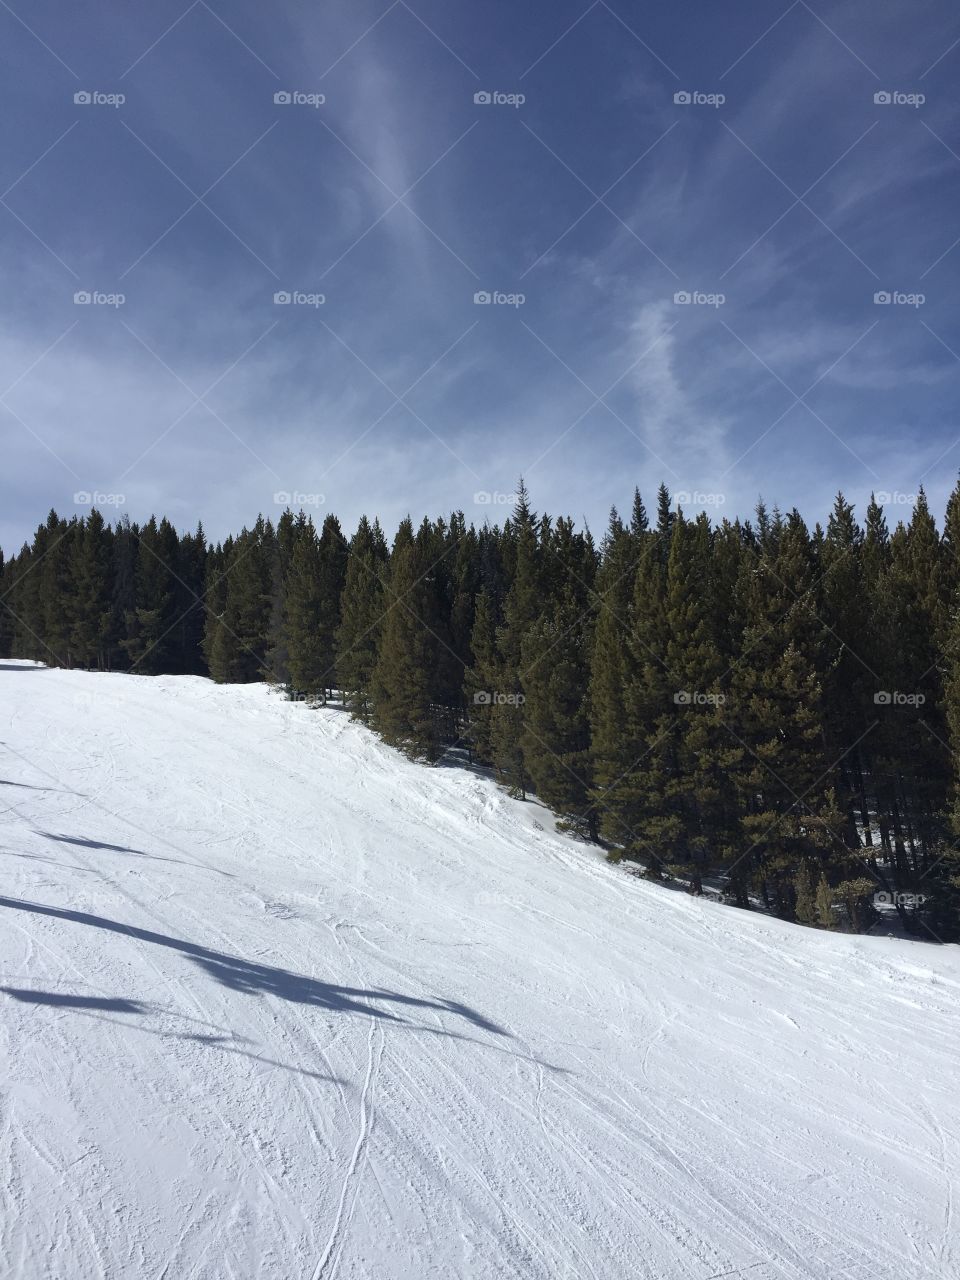 Tree lined ski slopes